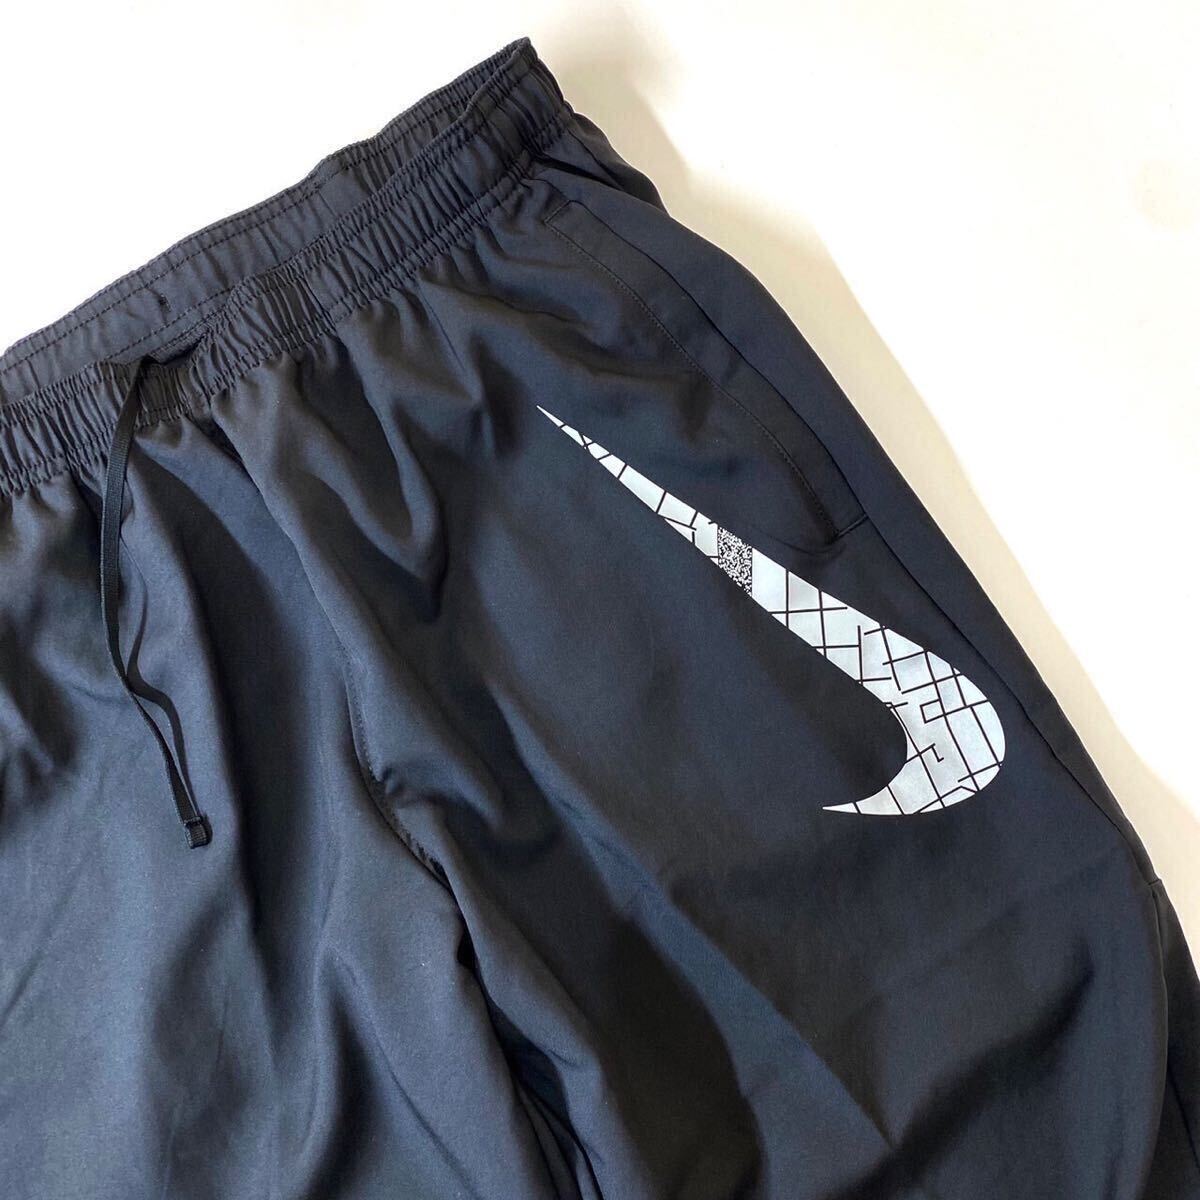 NIKE Nike DF Ran CHLLGRu-bnFLS брюки бег ветровка брюки DQ6490-010 размер M